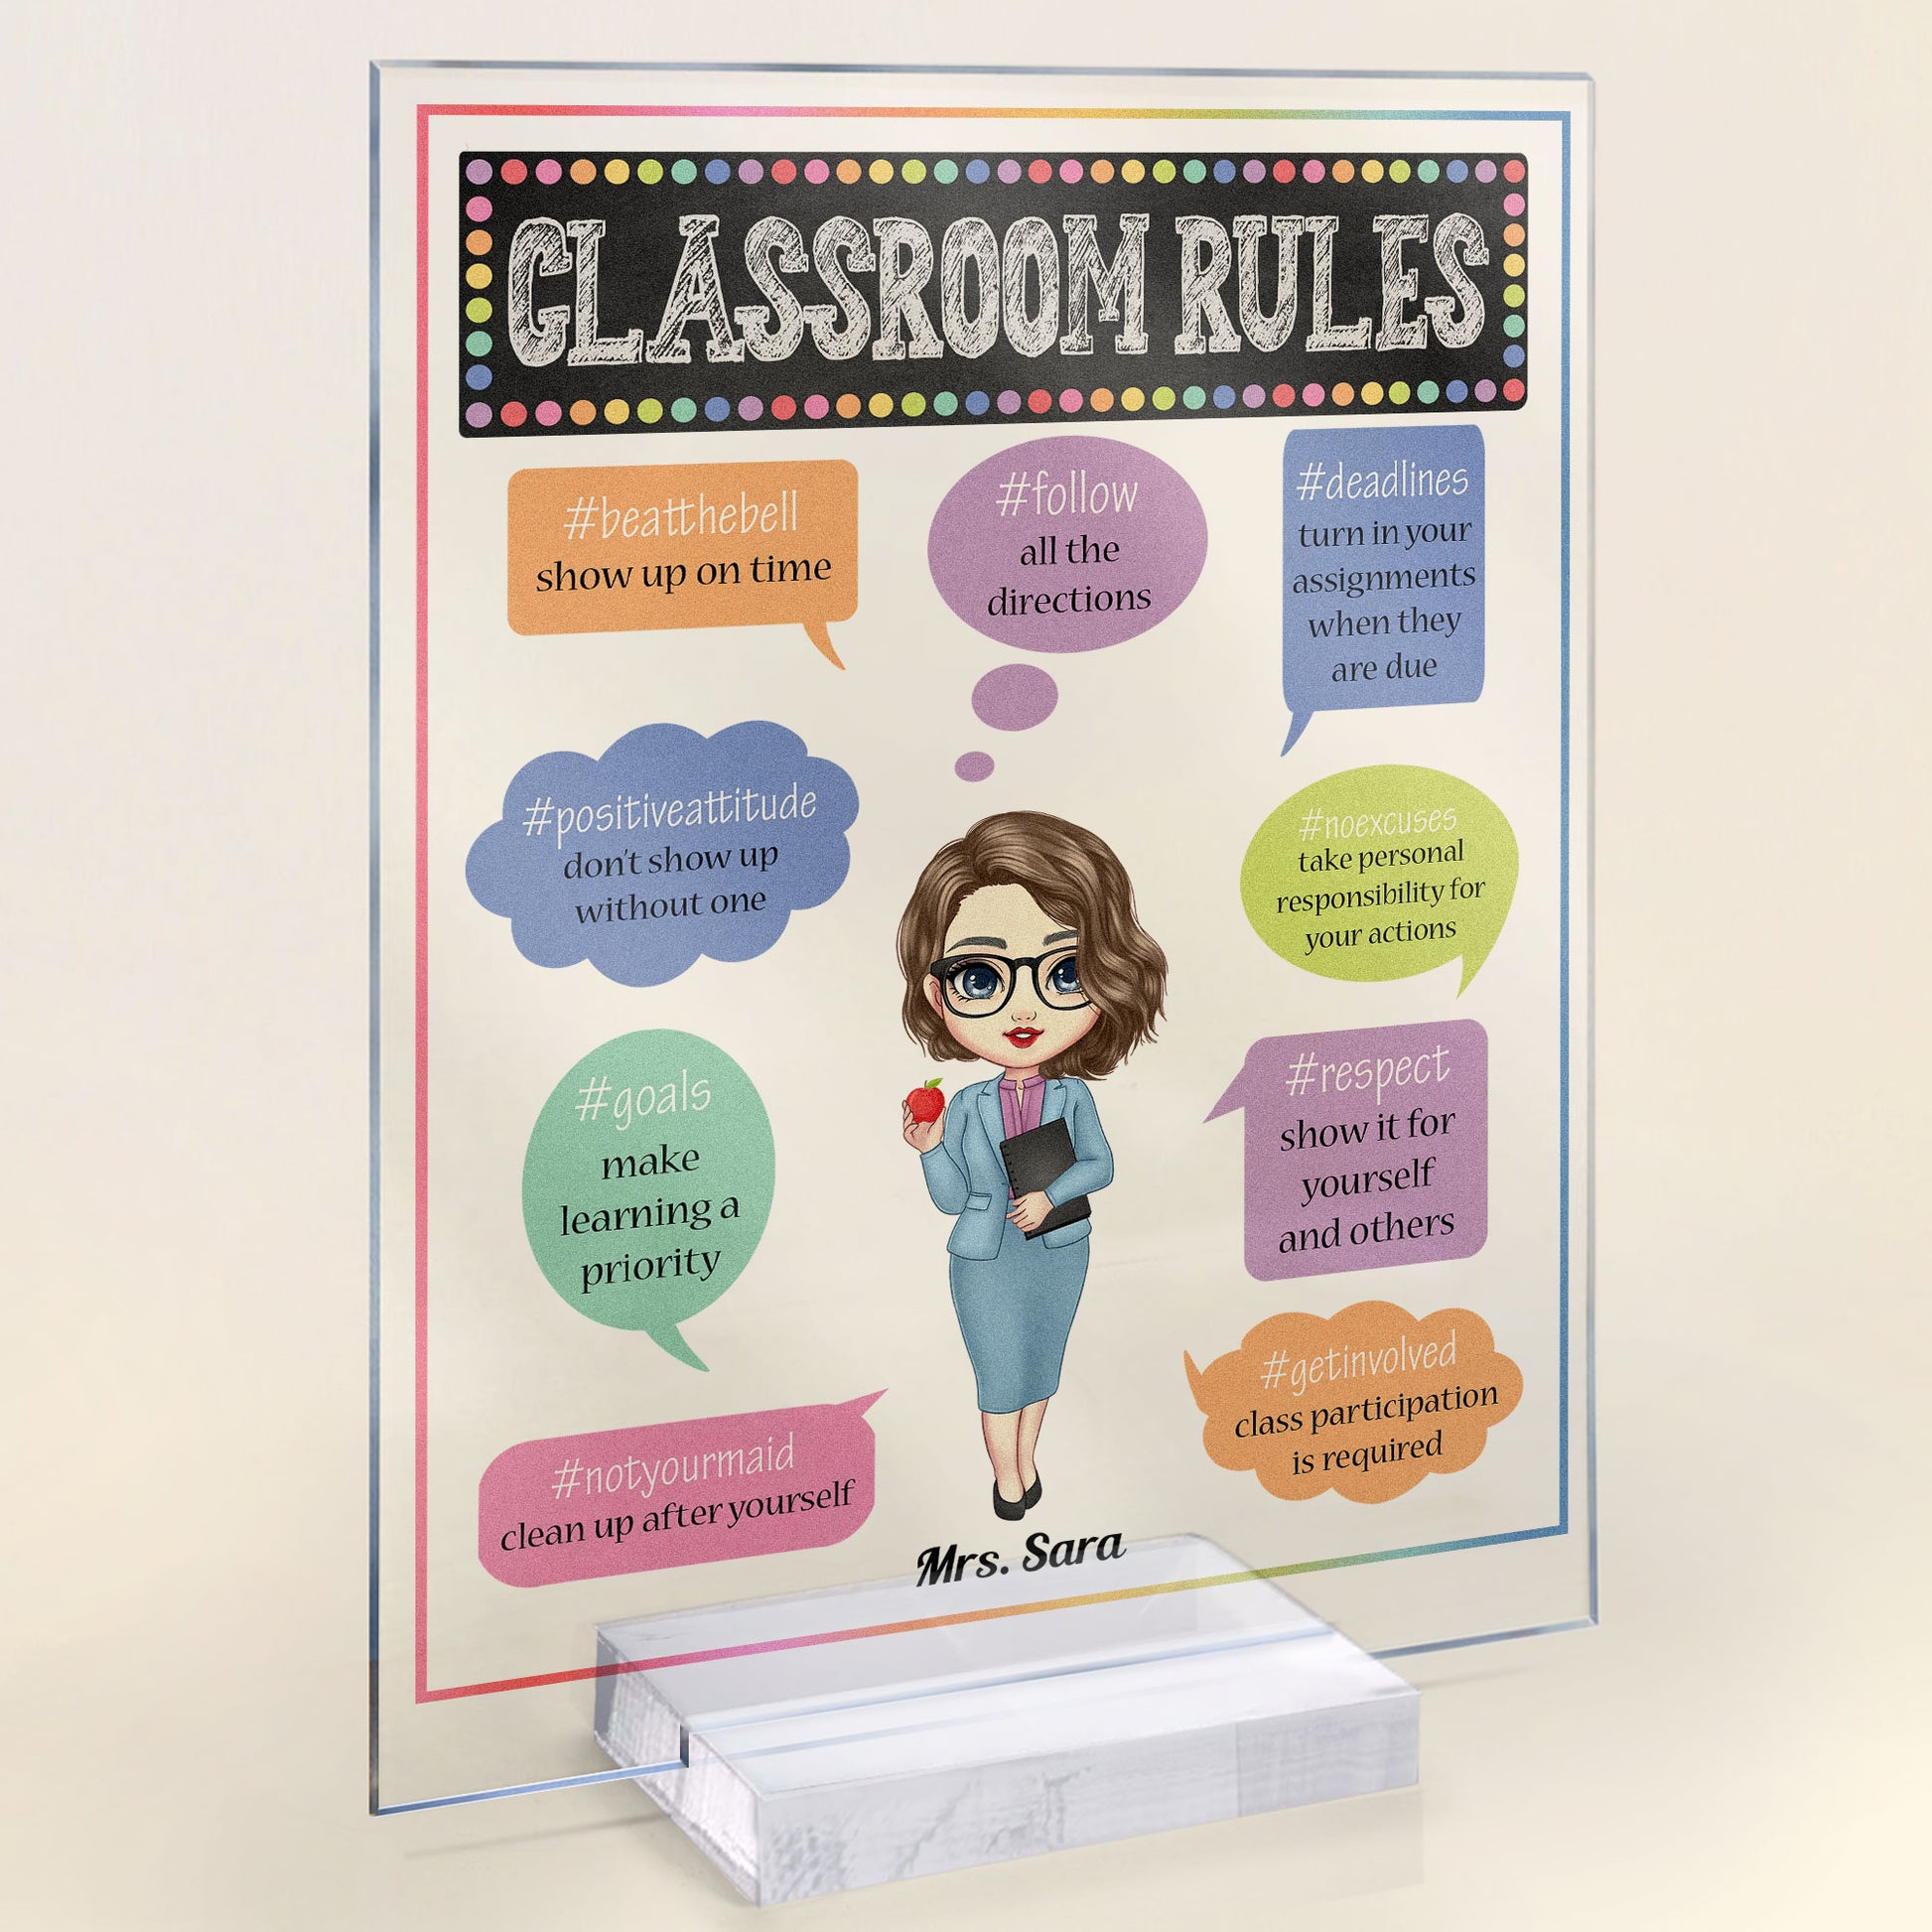 Classroom Rules - Personalized Acrylic Plaque - Teacher's Week Appreciation Gift For Teacher, Teacher's Assistants